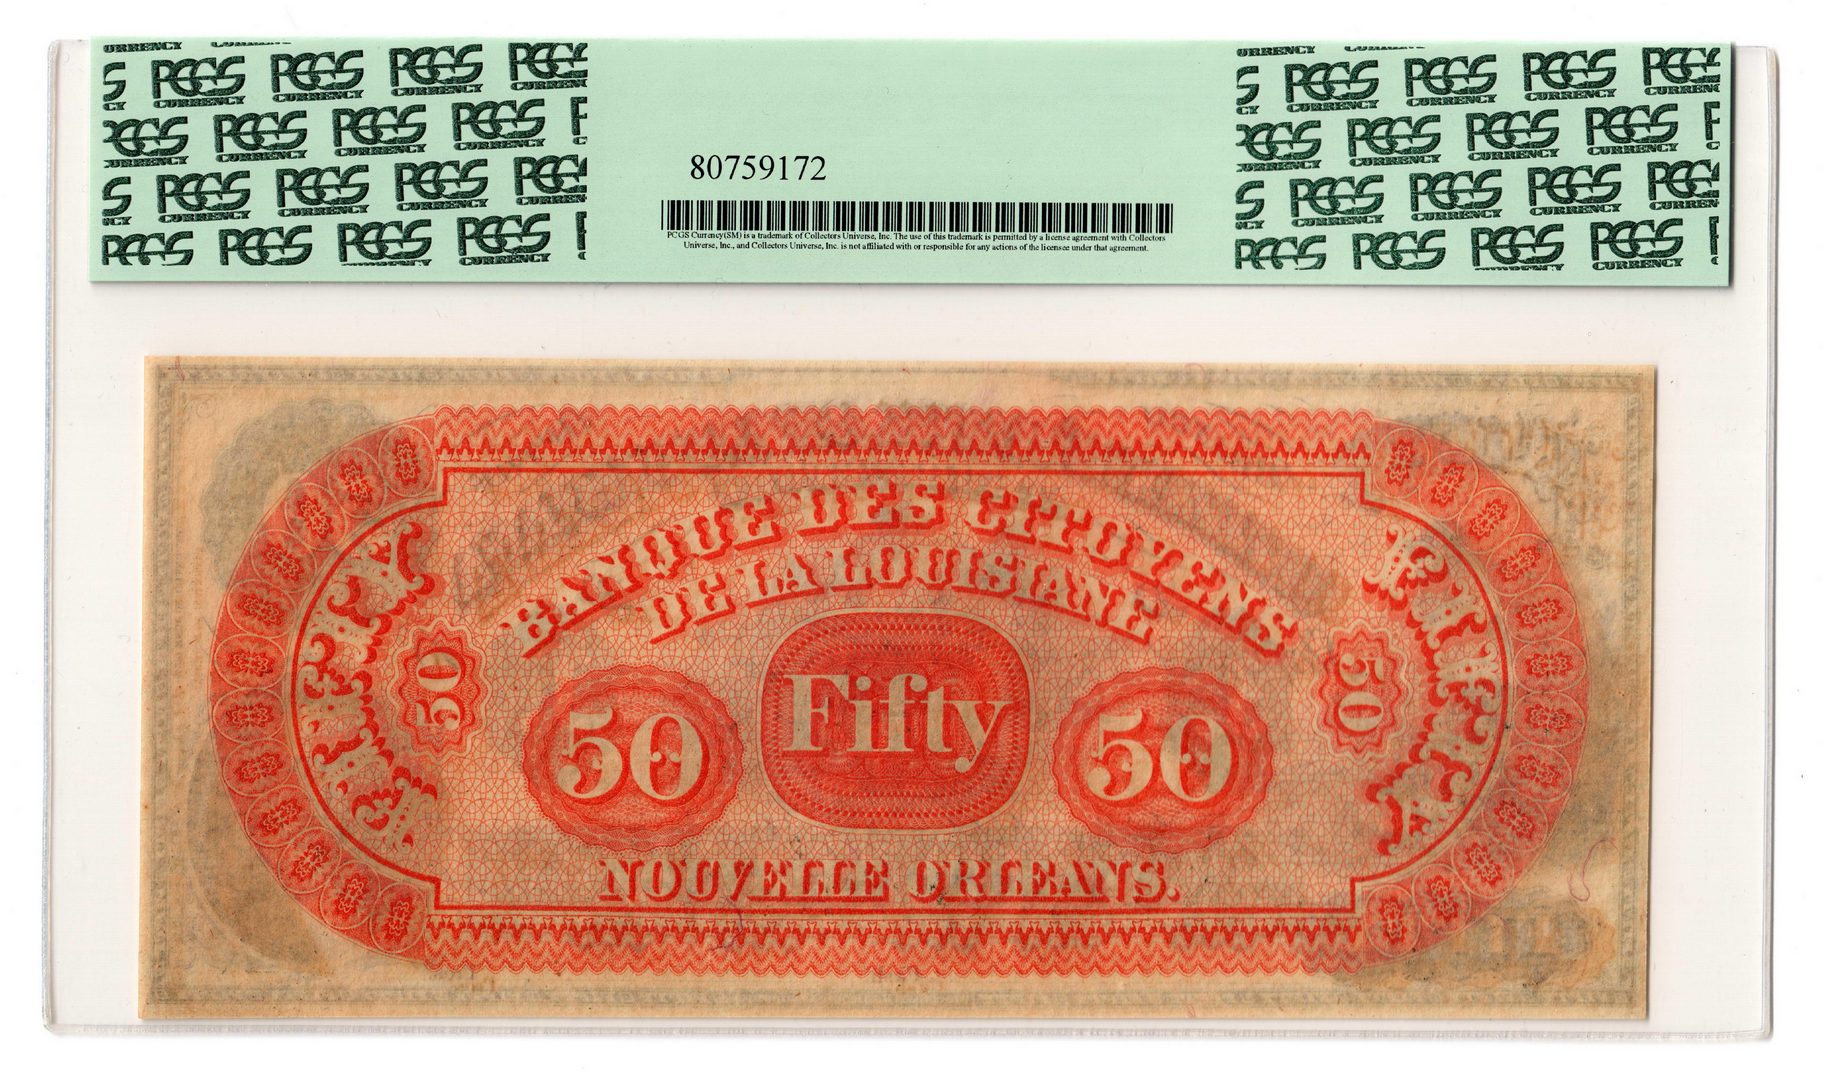 Lot 119: 3 Louisiana Obsolete "Remainder" Banknotes